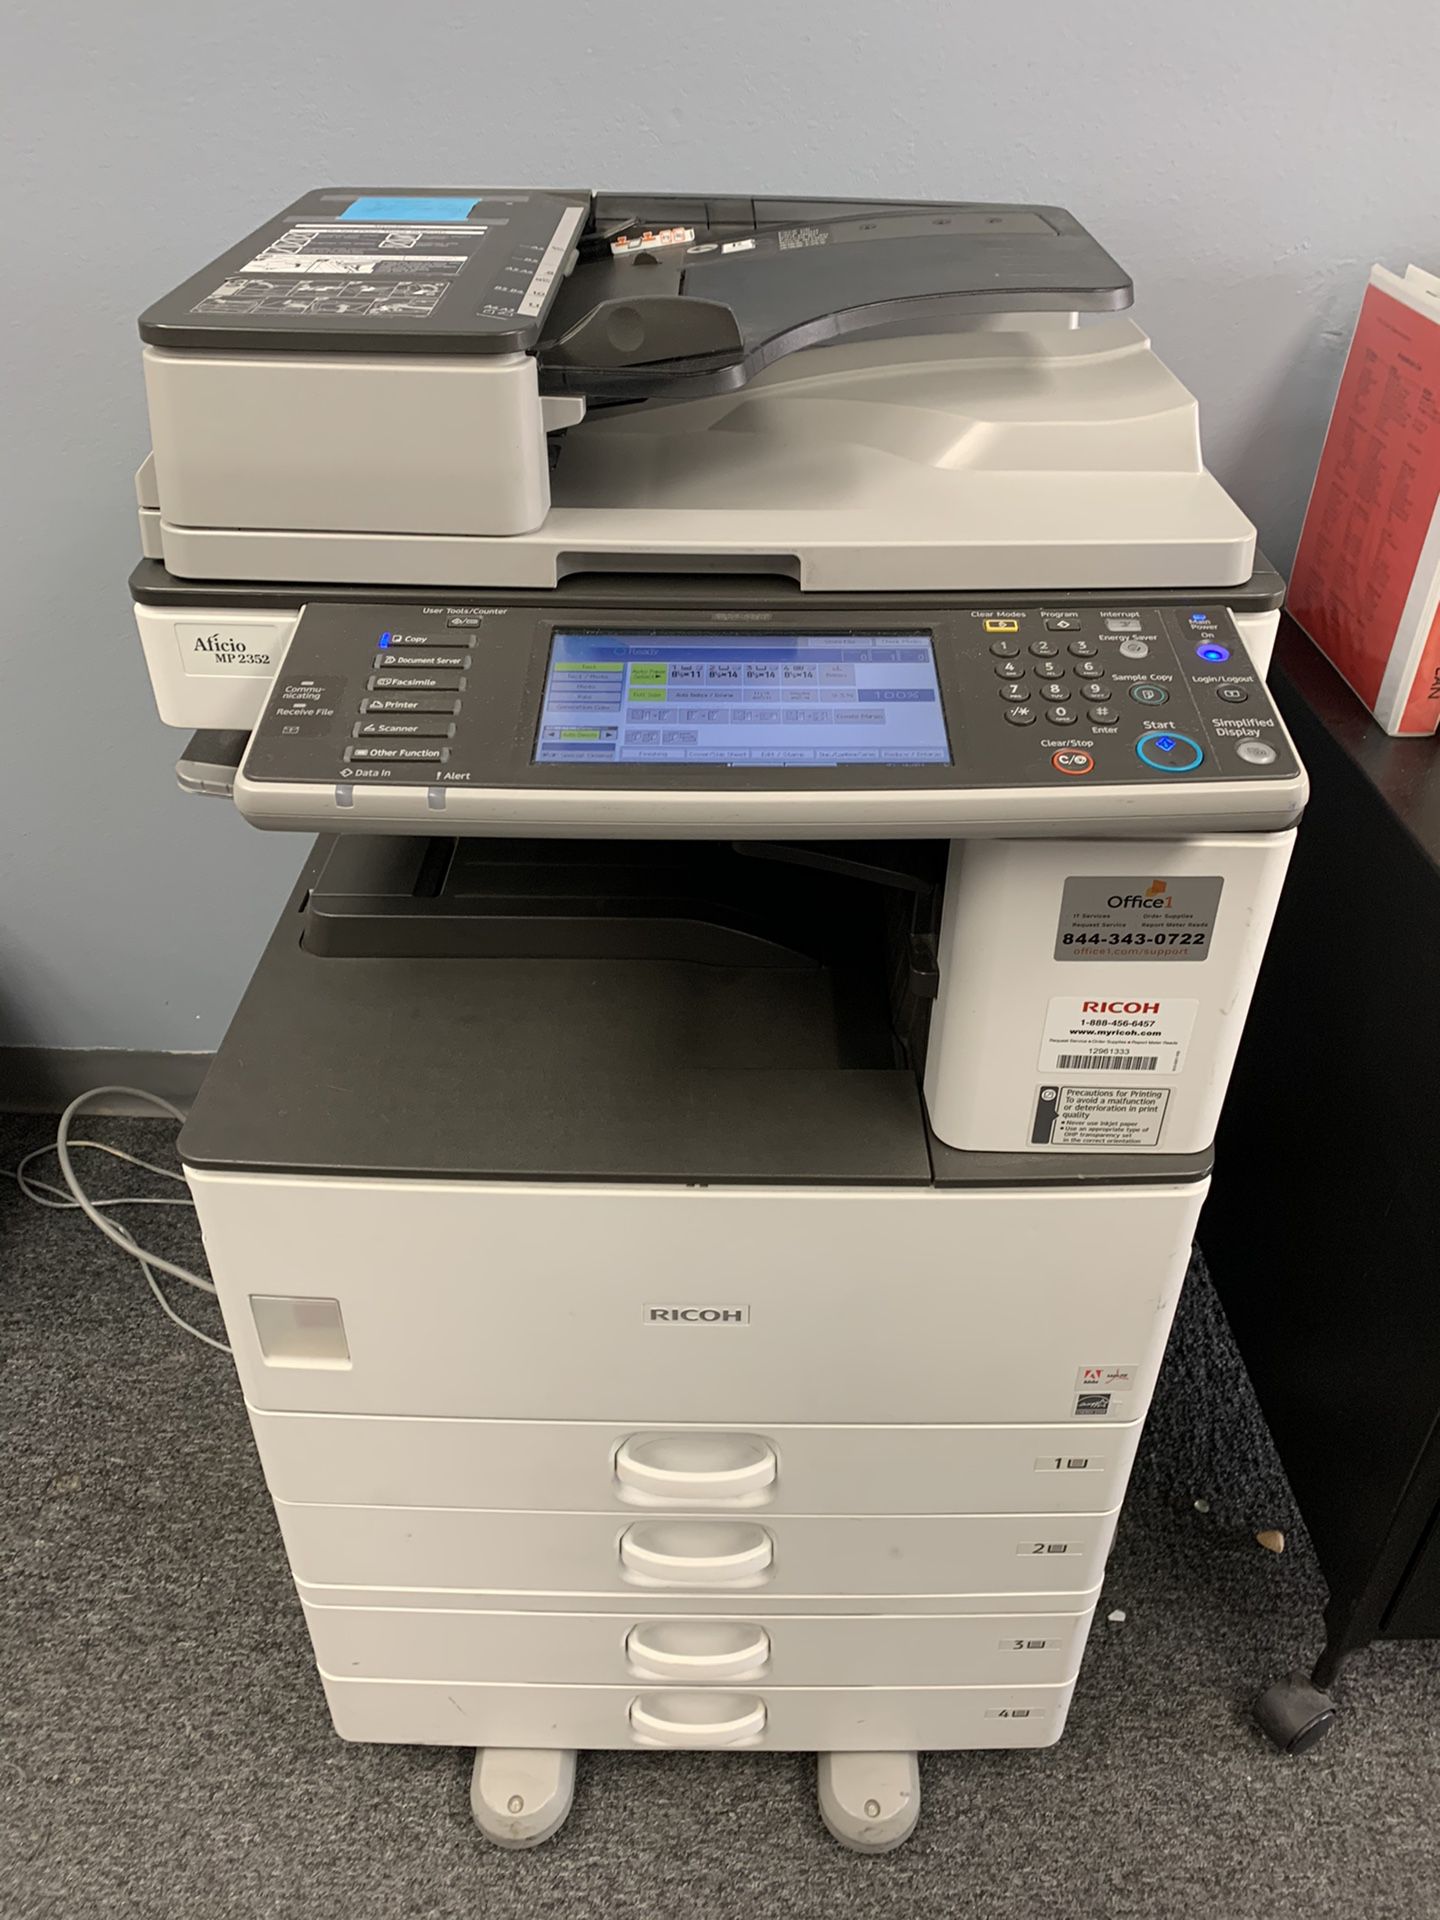 Ricoh office printer